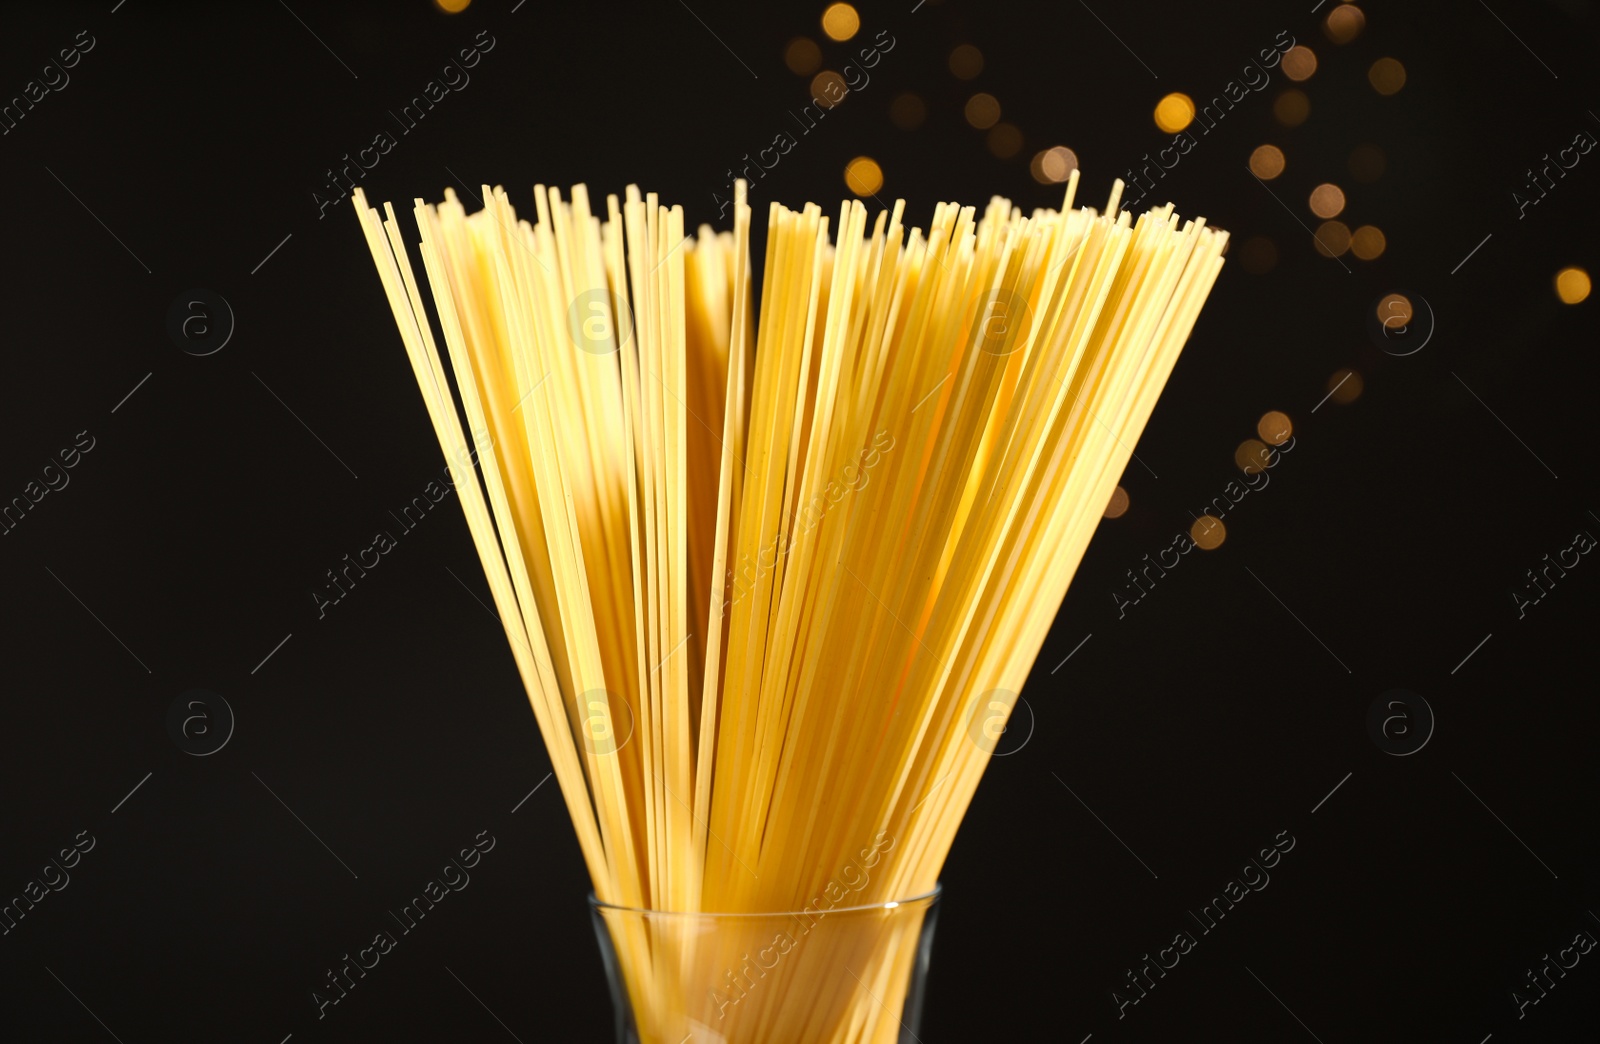 Photo of Uncooked spaghetti against blurred lights, closeup. Italian pasta